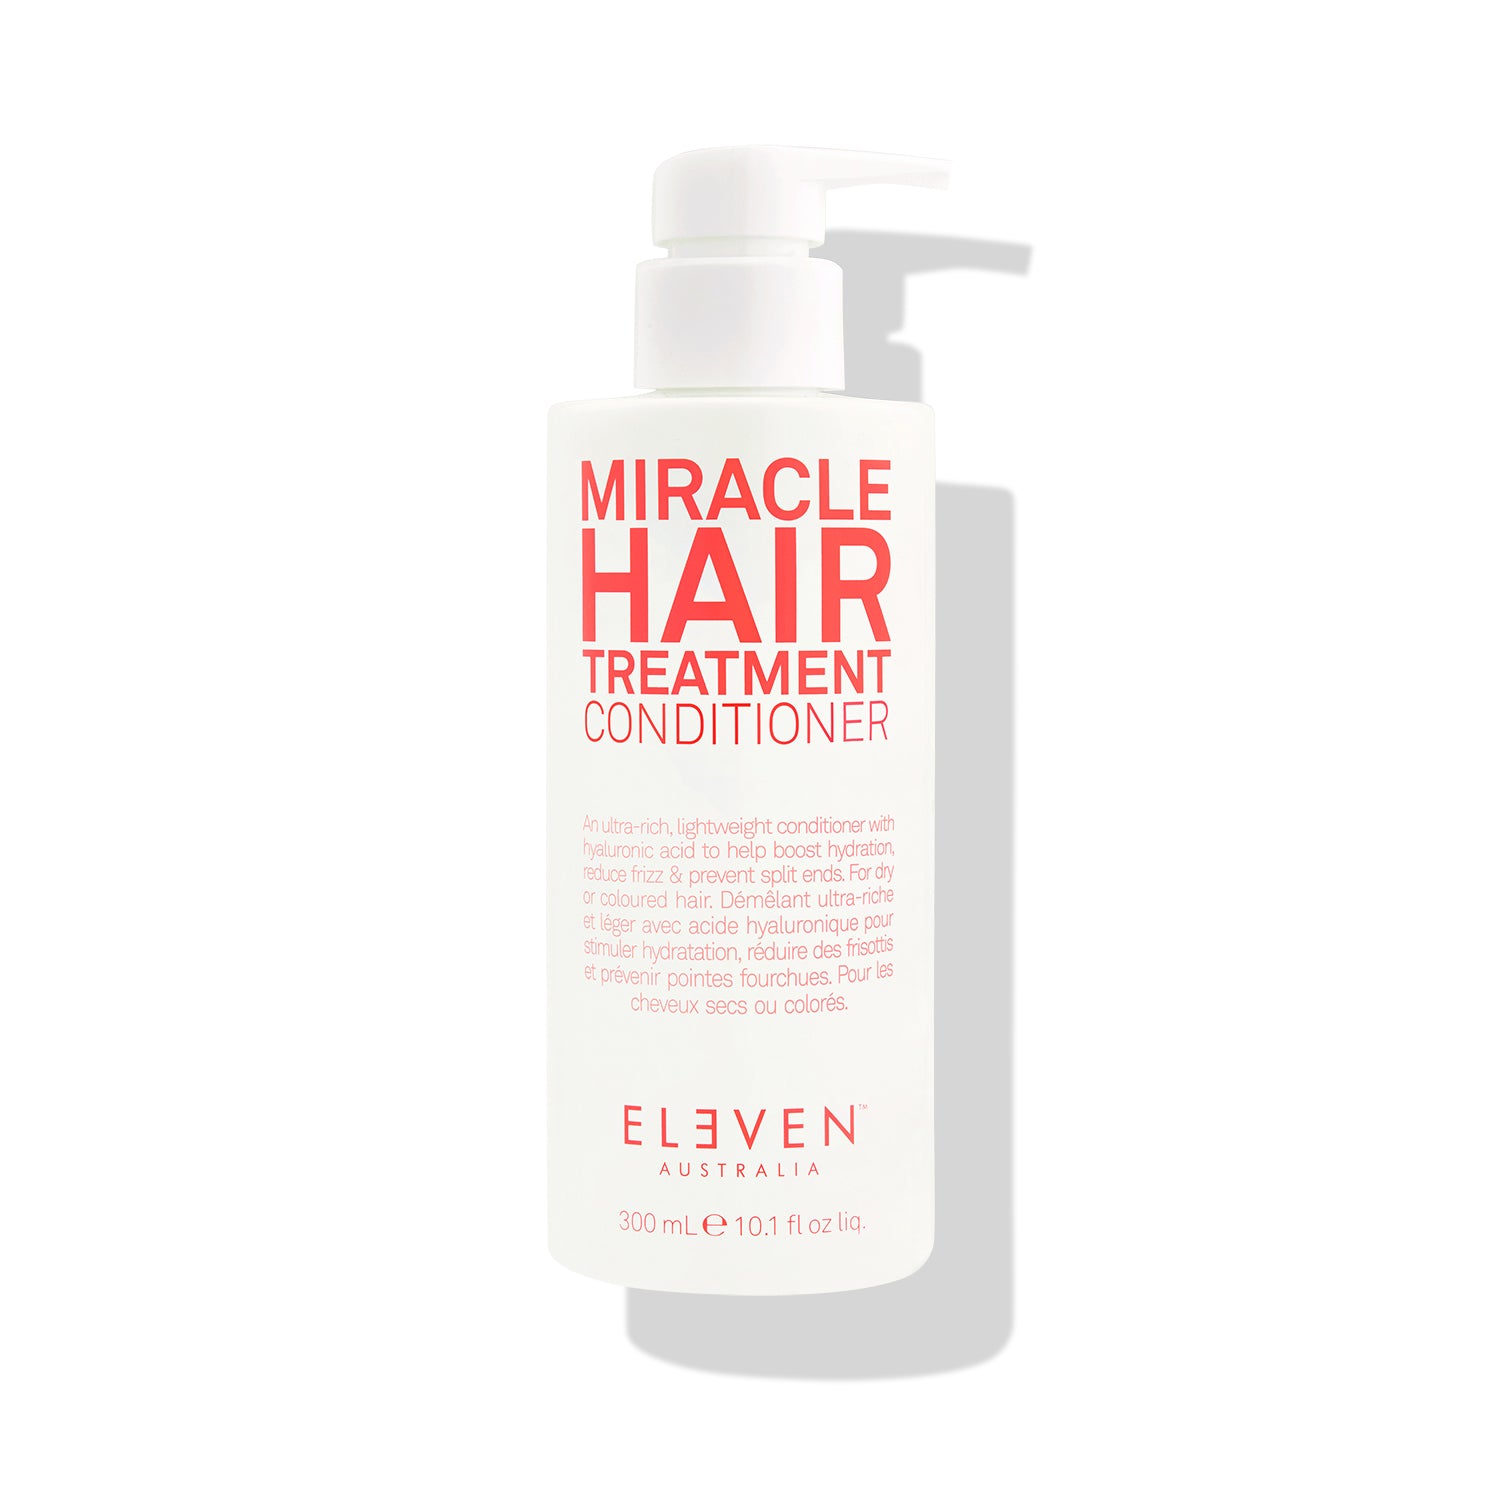 Miracle Hair Treatment Conditioner - 300ml - ELEVEN Australia